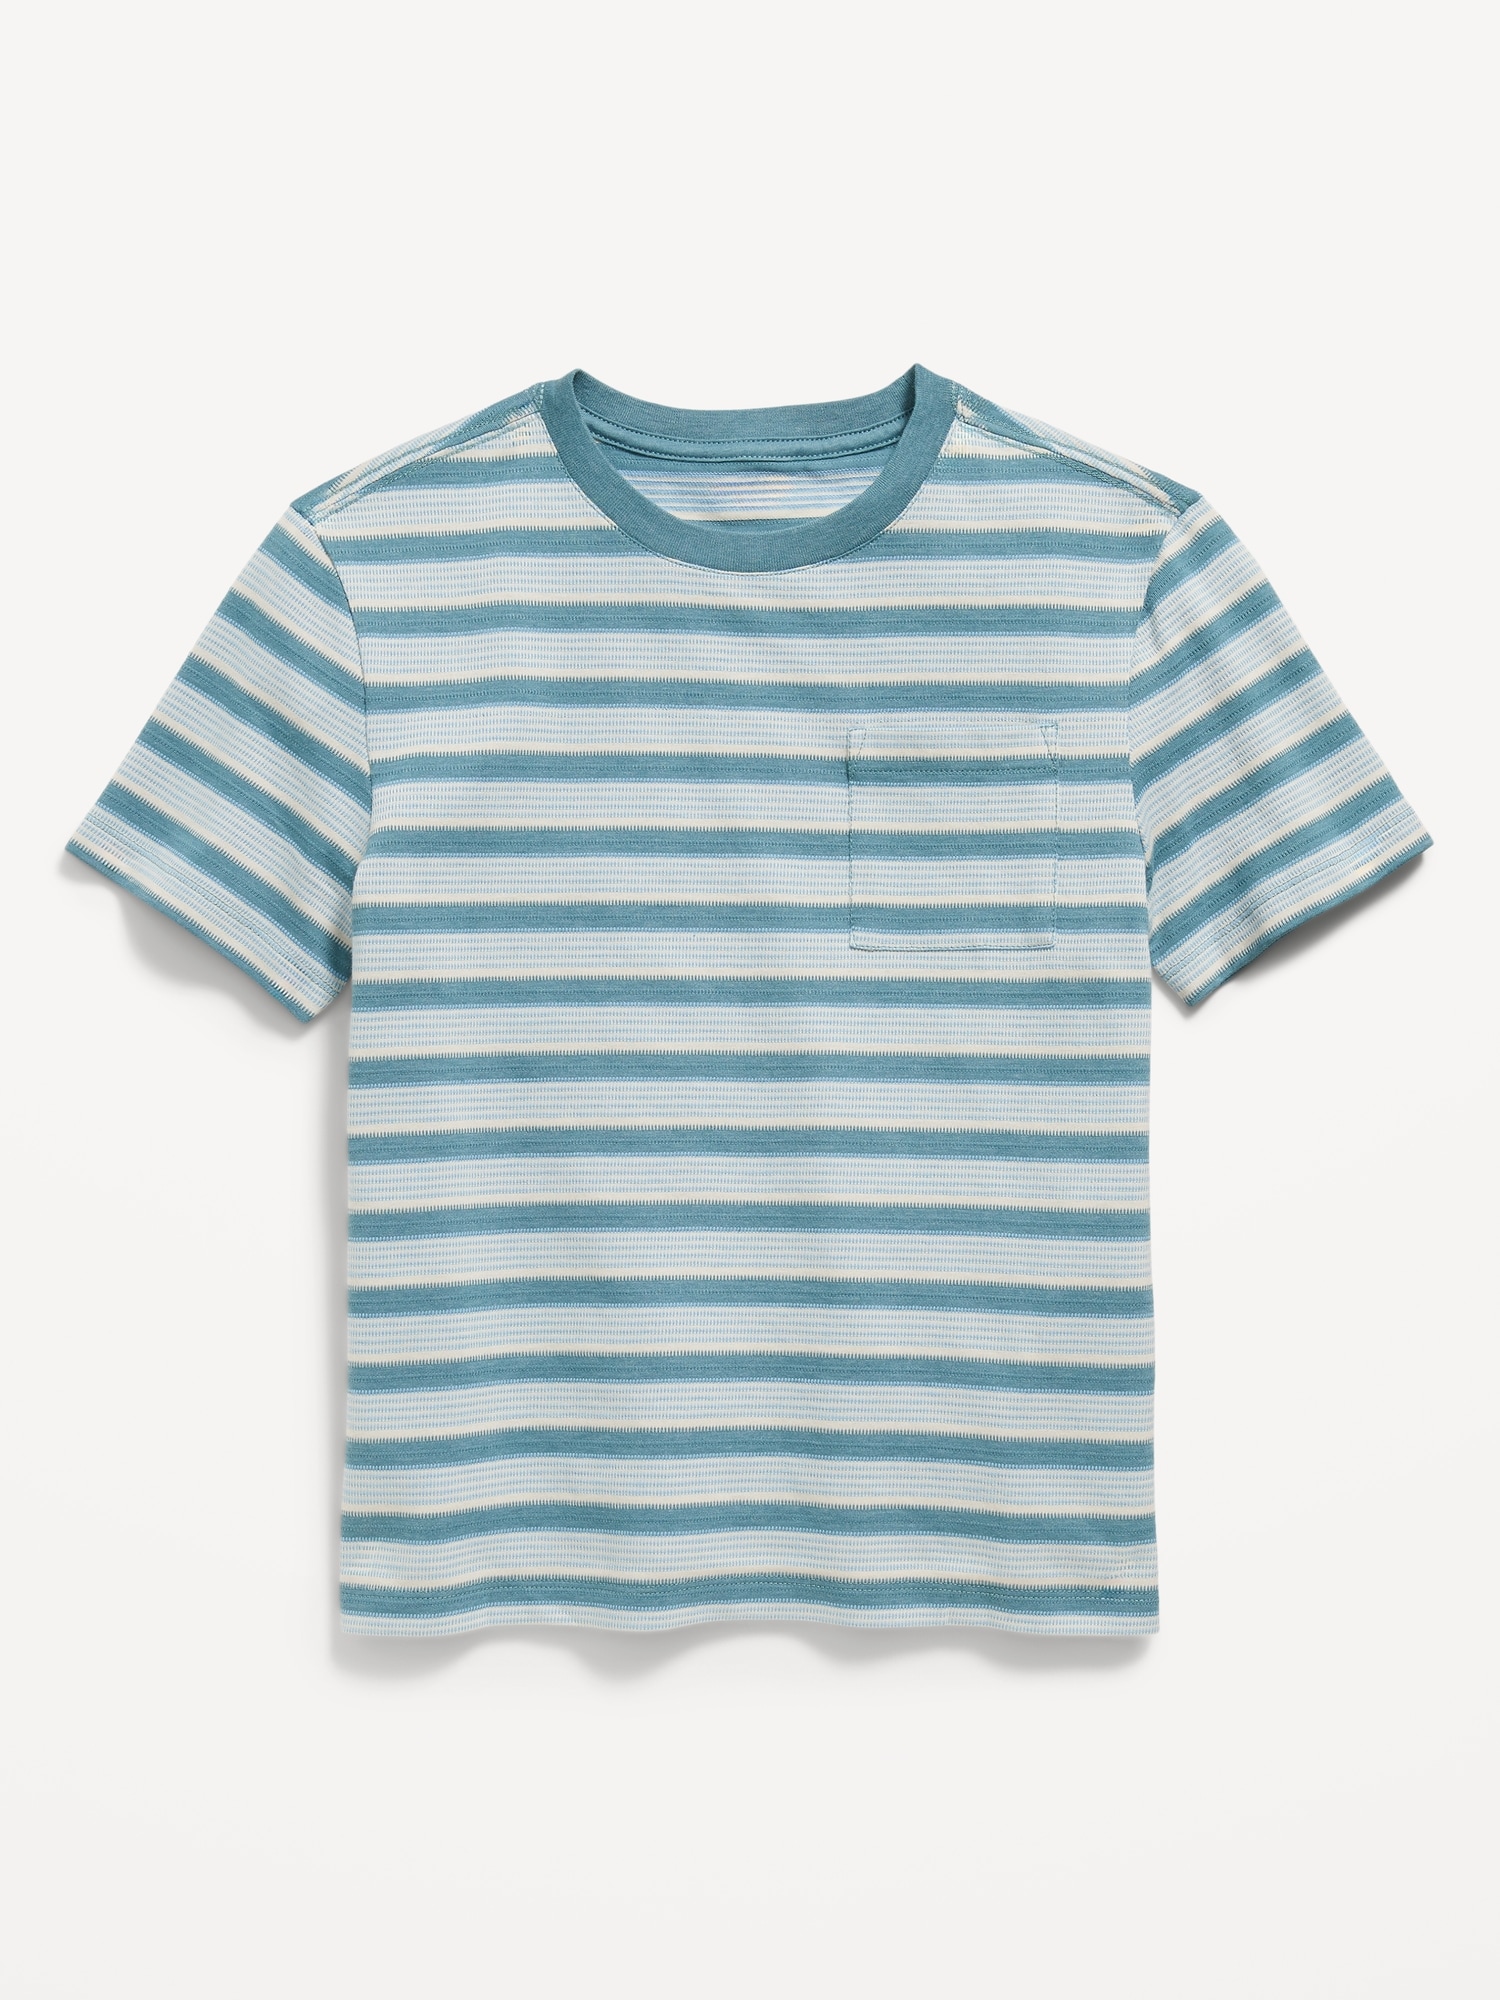 Textured Striped Short-Sleeve Pocket T-Shirt for Boys Hot Deal